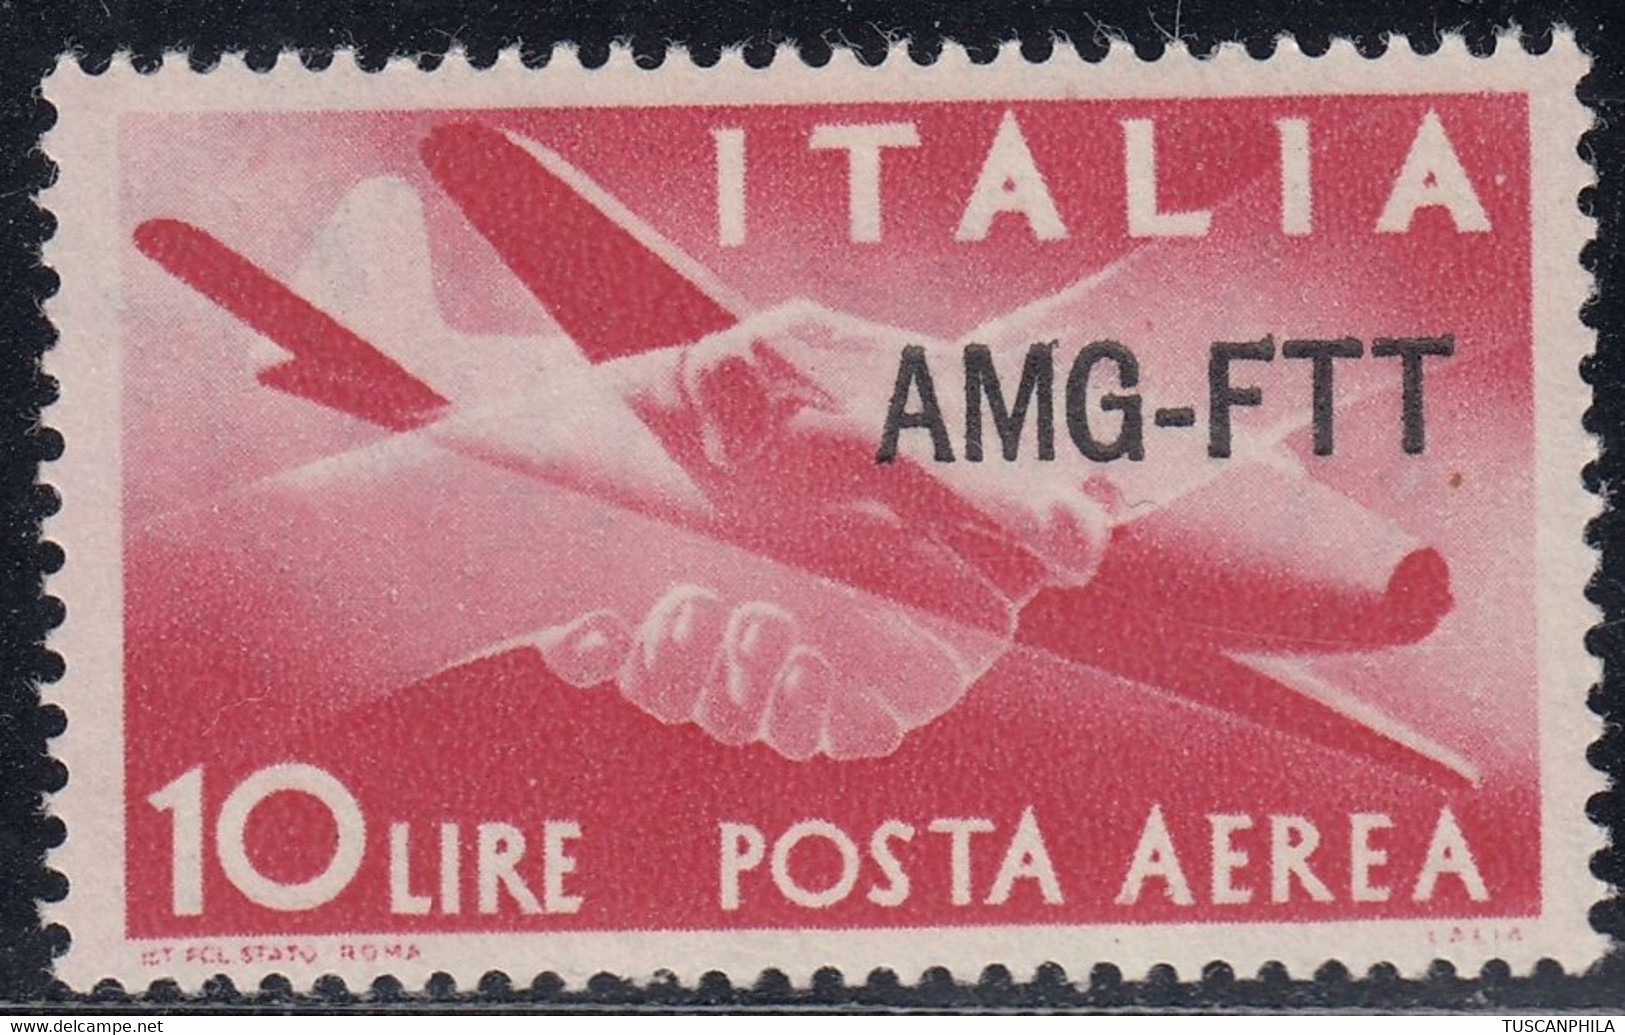 Trieste AMG-FTT Posta Aerea Varietà Decalco Sass. A20h MNH** Cv. 12 - Luftpost